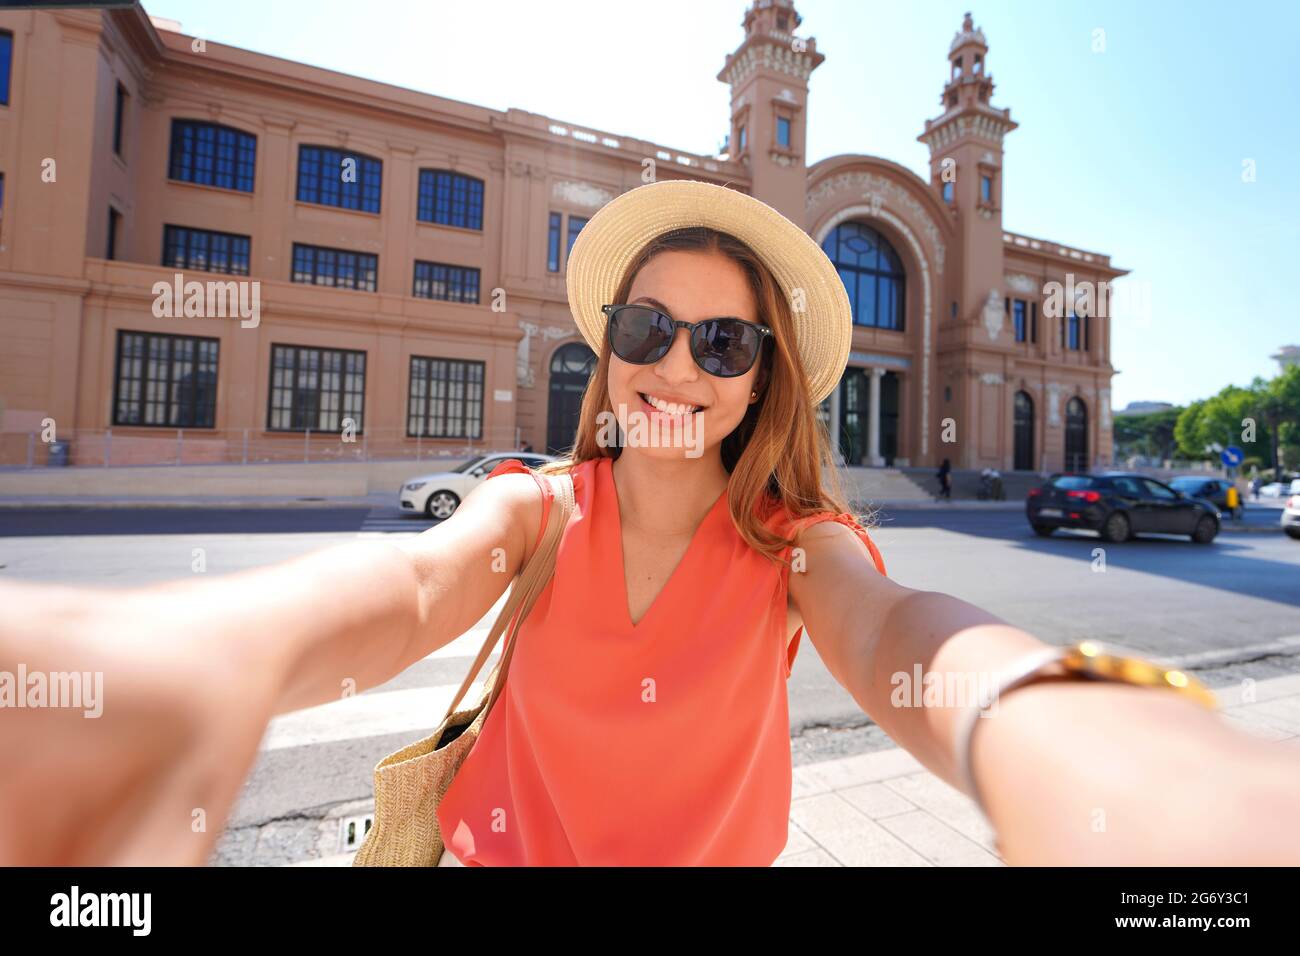 Visiting Bari. Self portrait of smiling young traveler woman enjoying visiting Bari, Apulia, Italy. Stock Photo